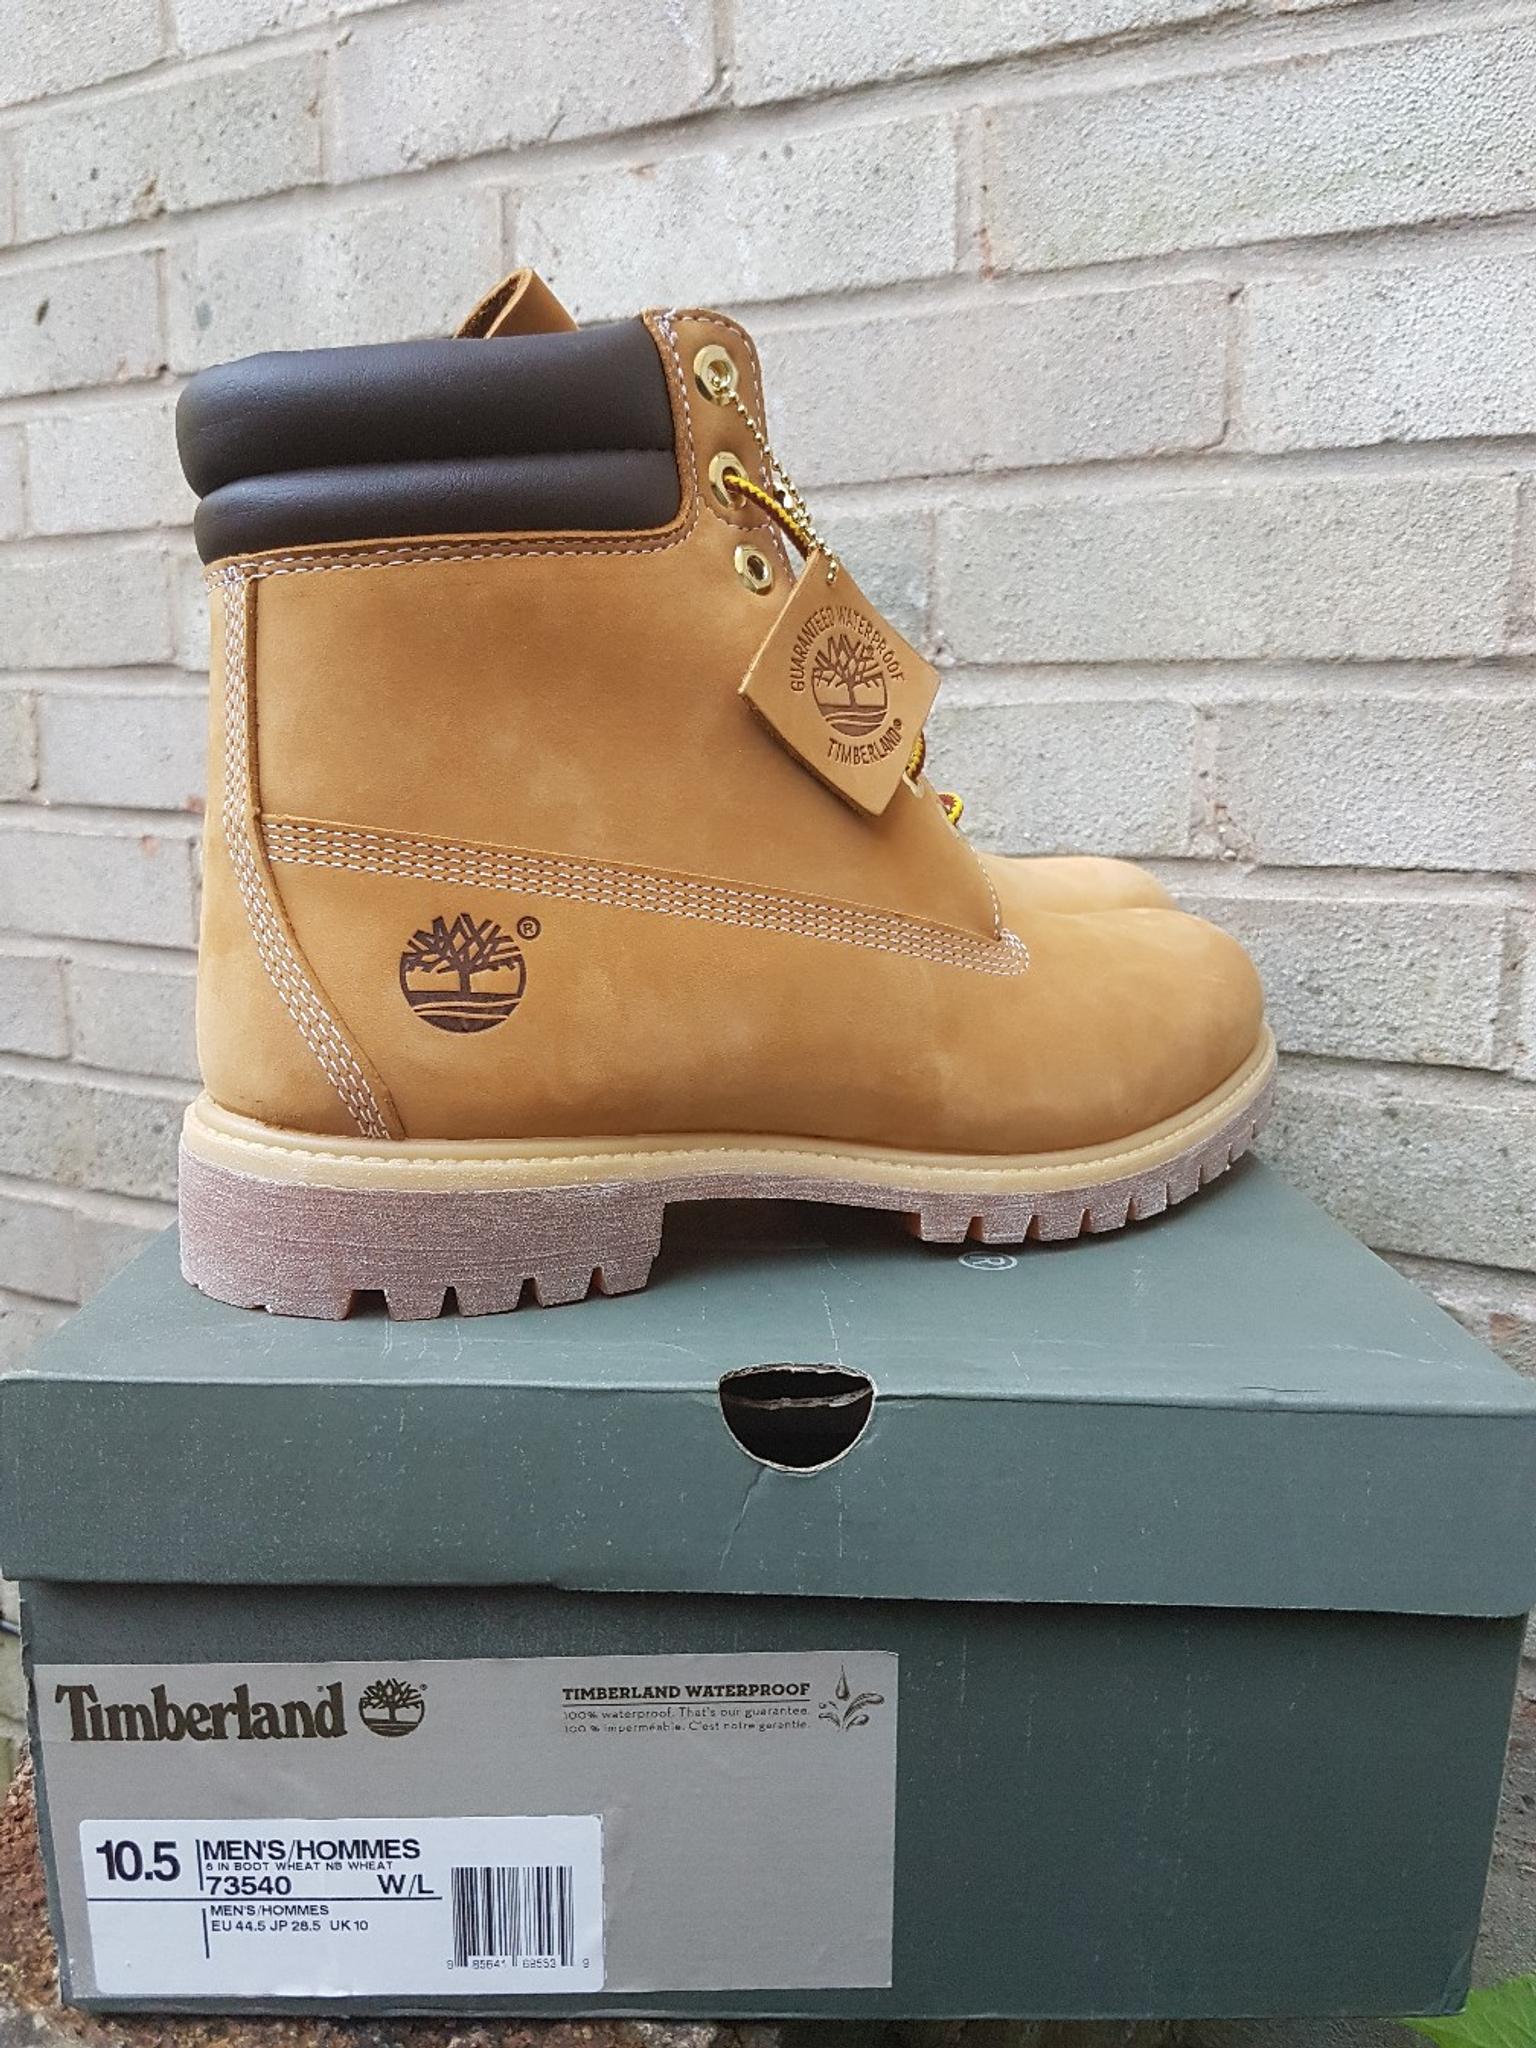 73540 timberland boots